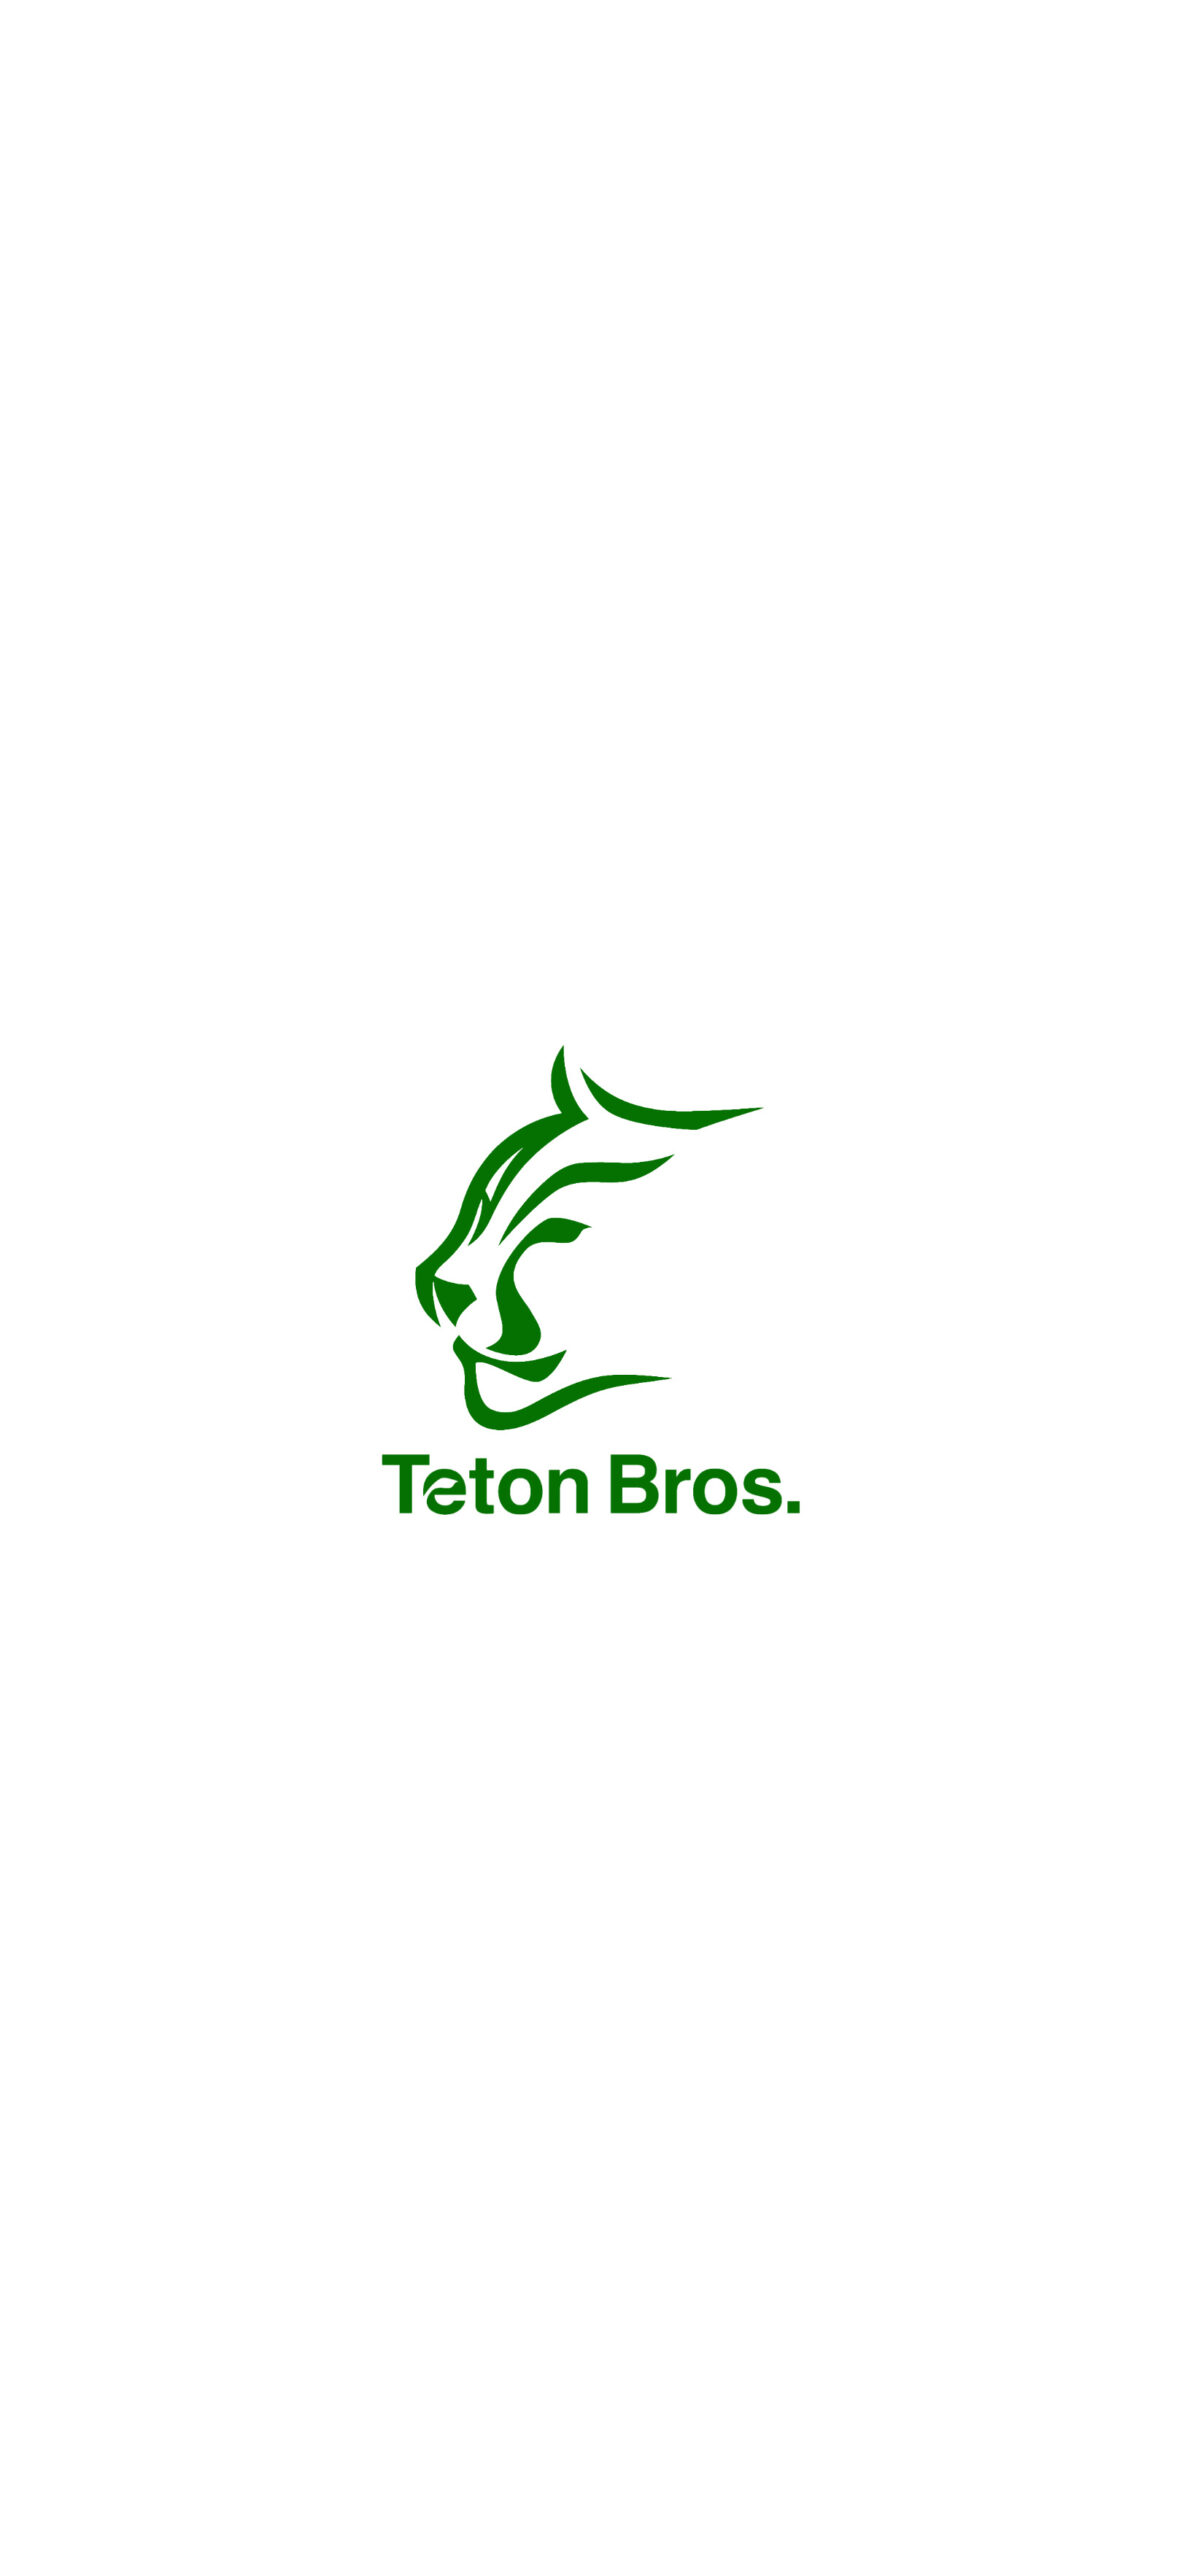 Teton Bros ティートンブロスの無料高画質スマホ壁紙50枚 エモい スマホ壁紙辞典